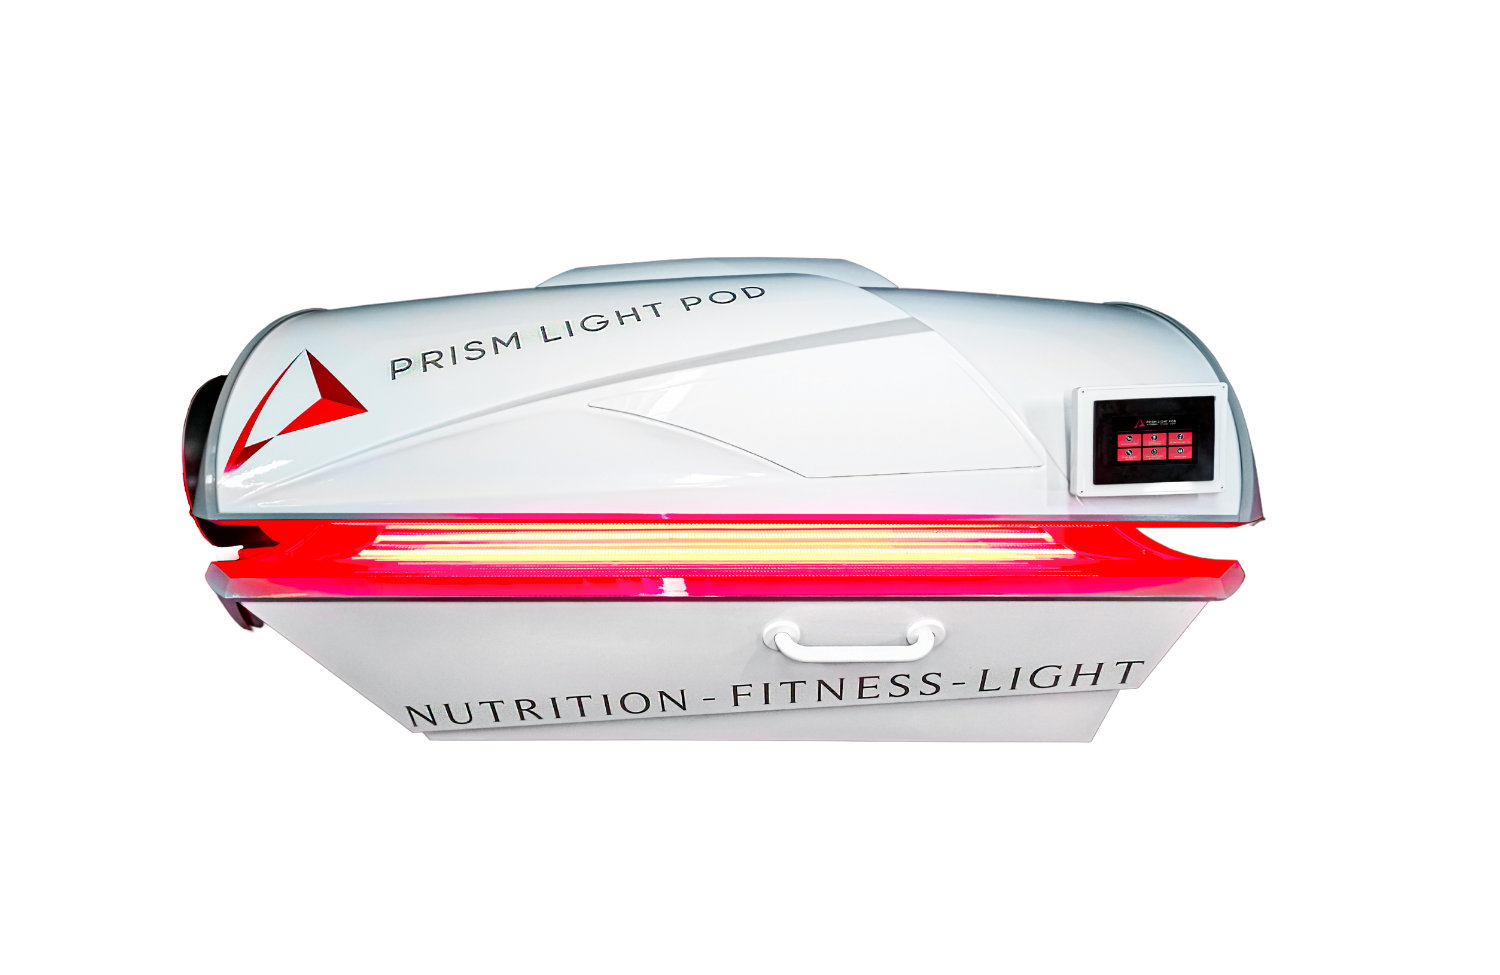 The Spa Team Light Pad - Prism Light Pad